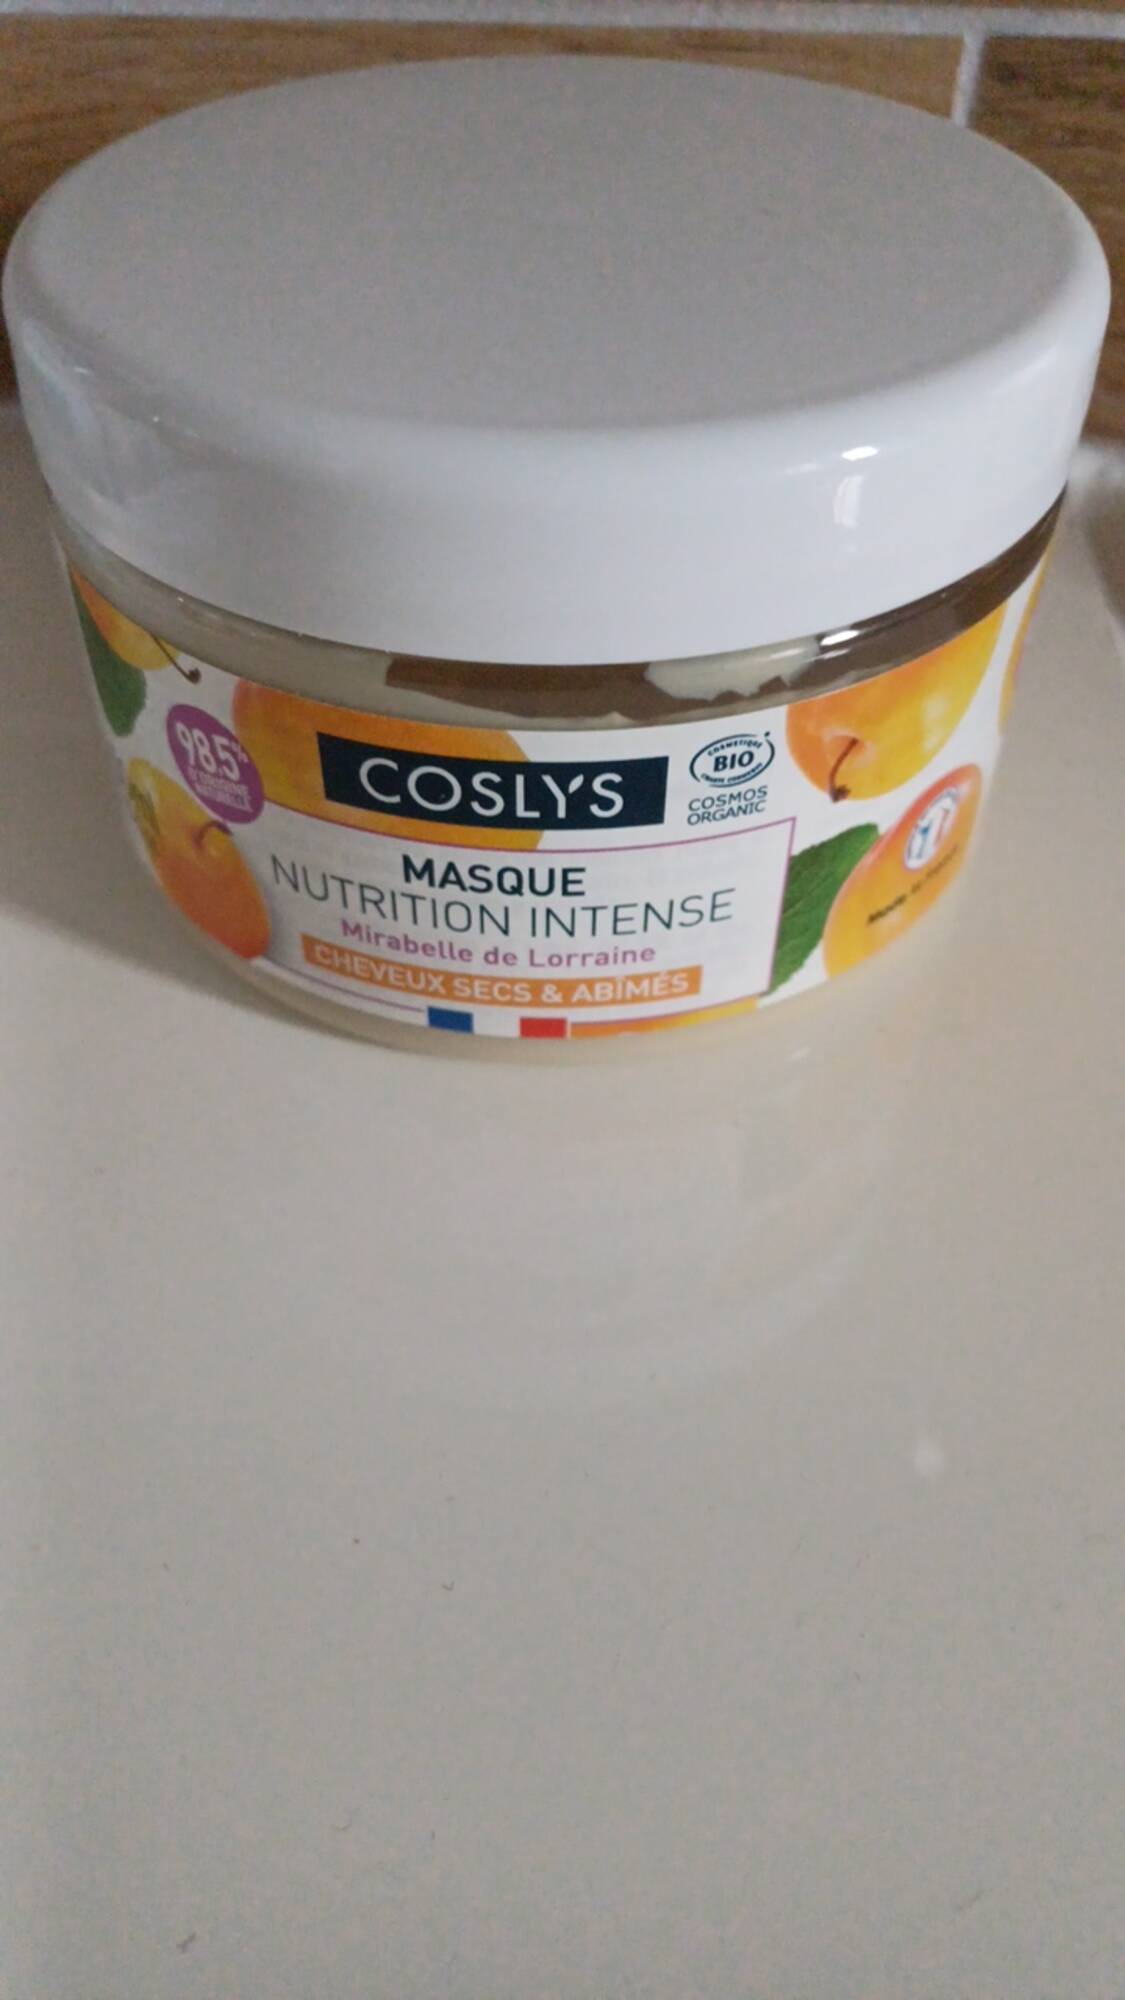 COSLYS - Masque nutrition intense Mirabelle de Lorraine 